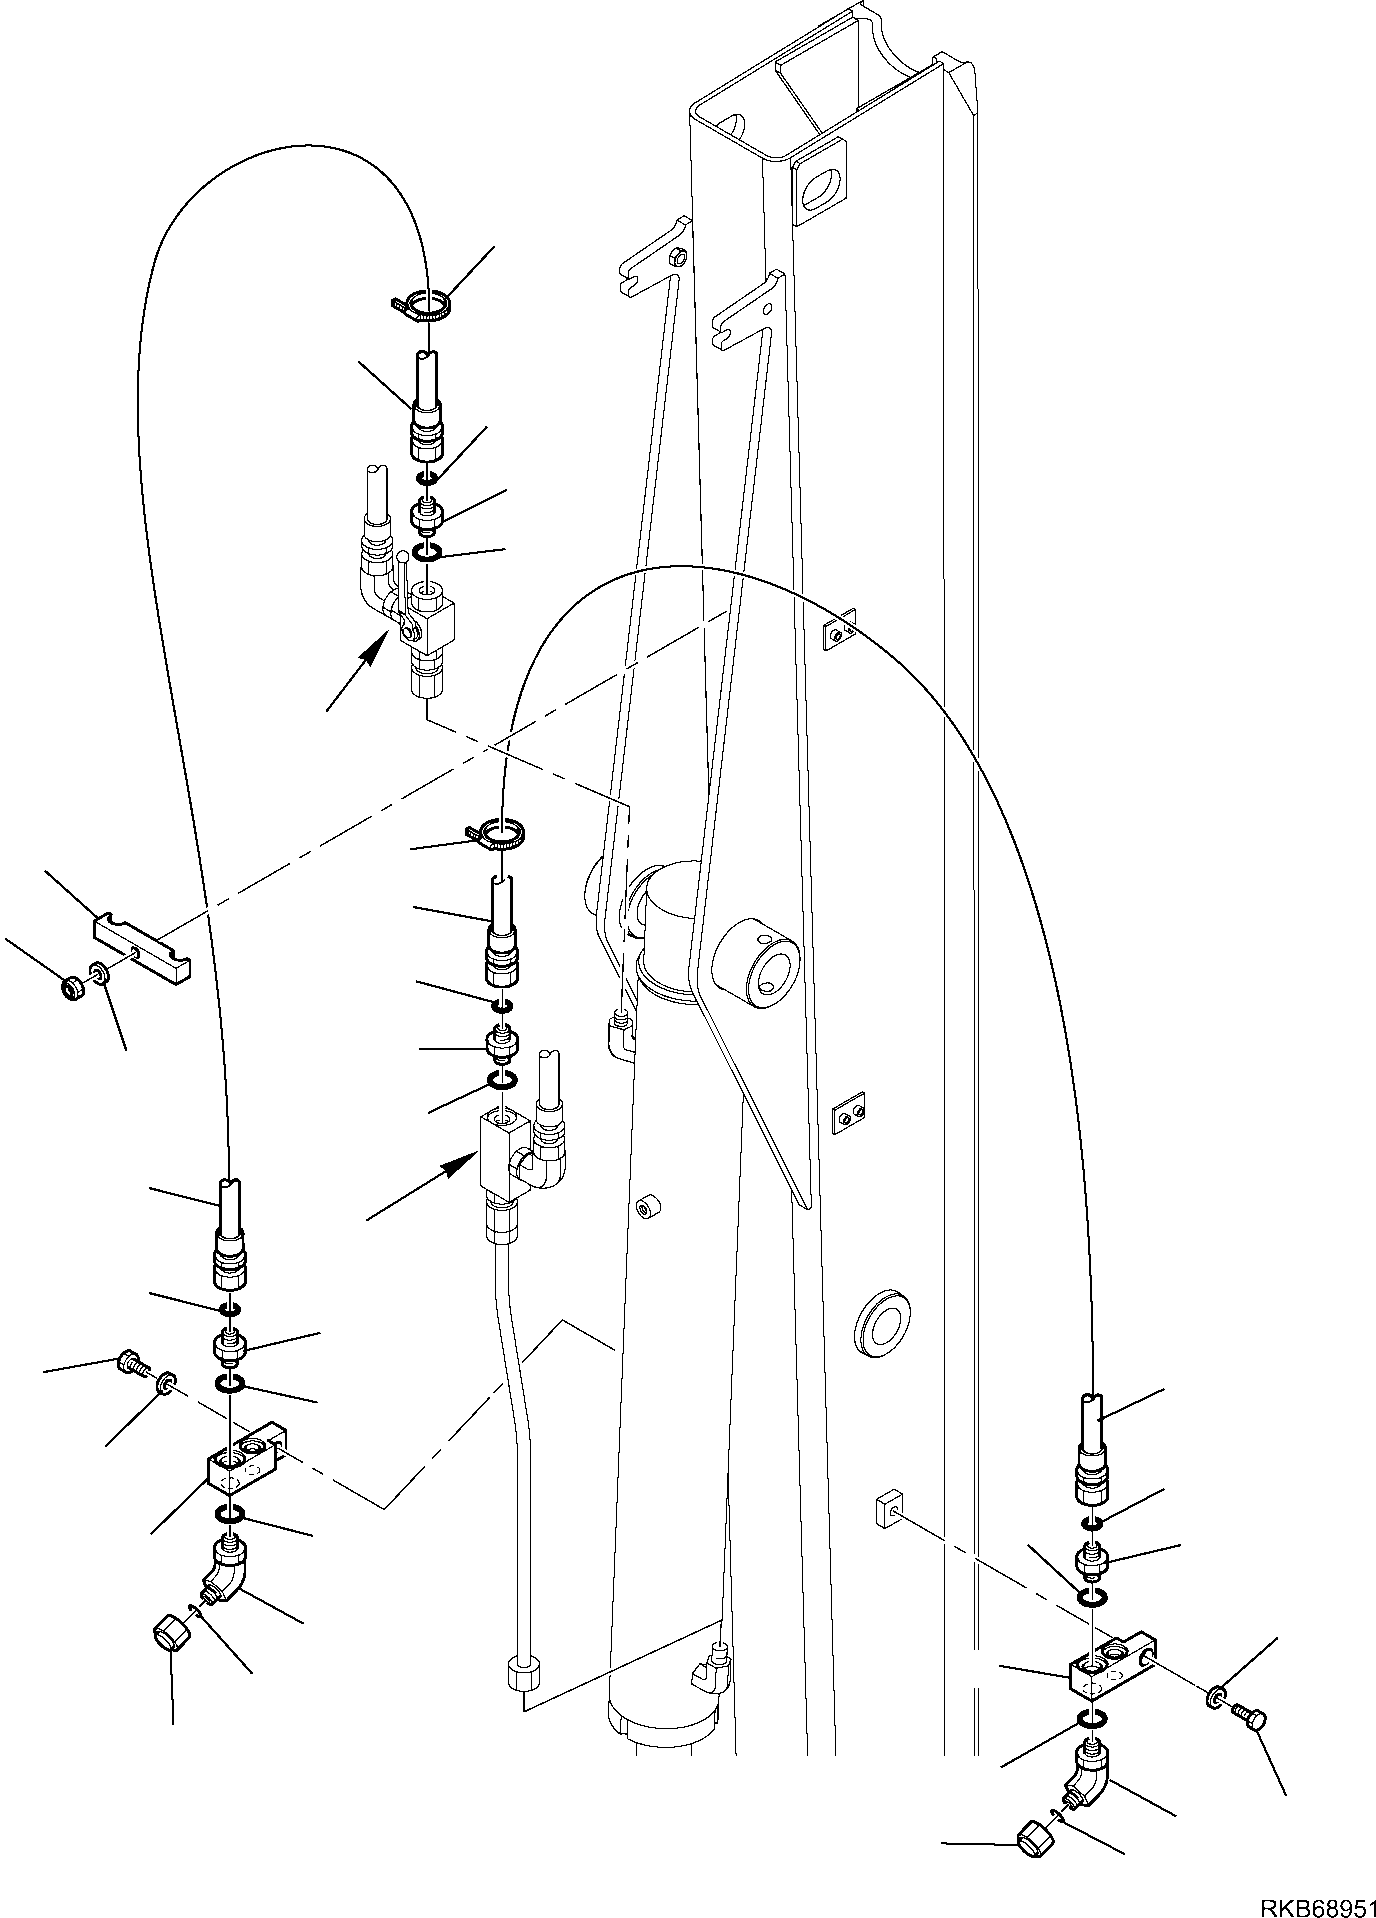 142. HYDRAULIC PIPING (CUTTING AND ROTATING BUCKET) (3/3) [6920] - Komatsu part WB97S-5E0 S/N F30003-Up [wb97s5e0]